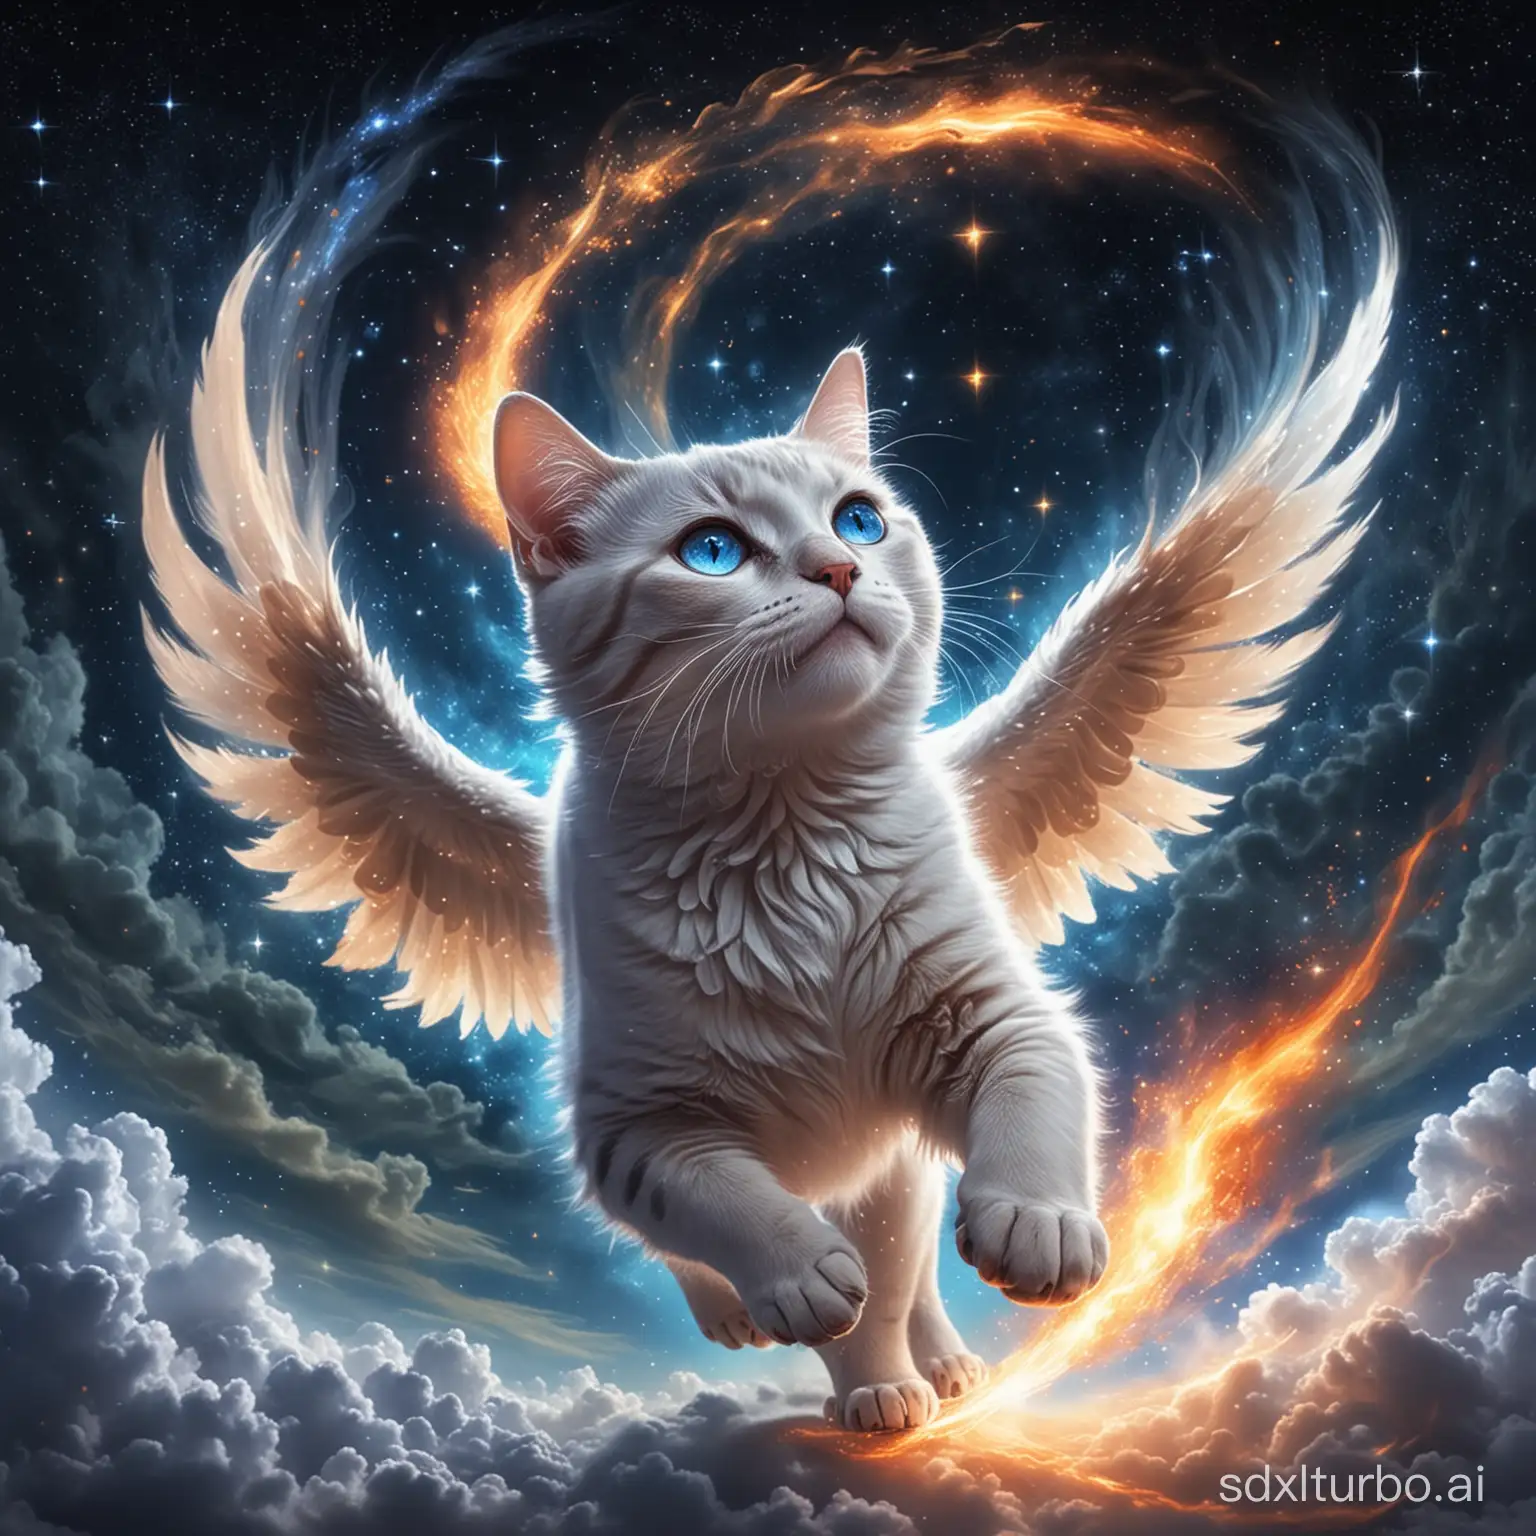 Winged-Cat-Galloping-Through-Starlit-Skies